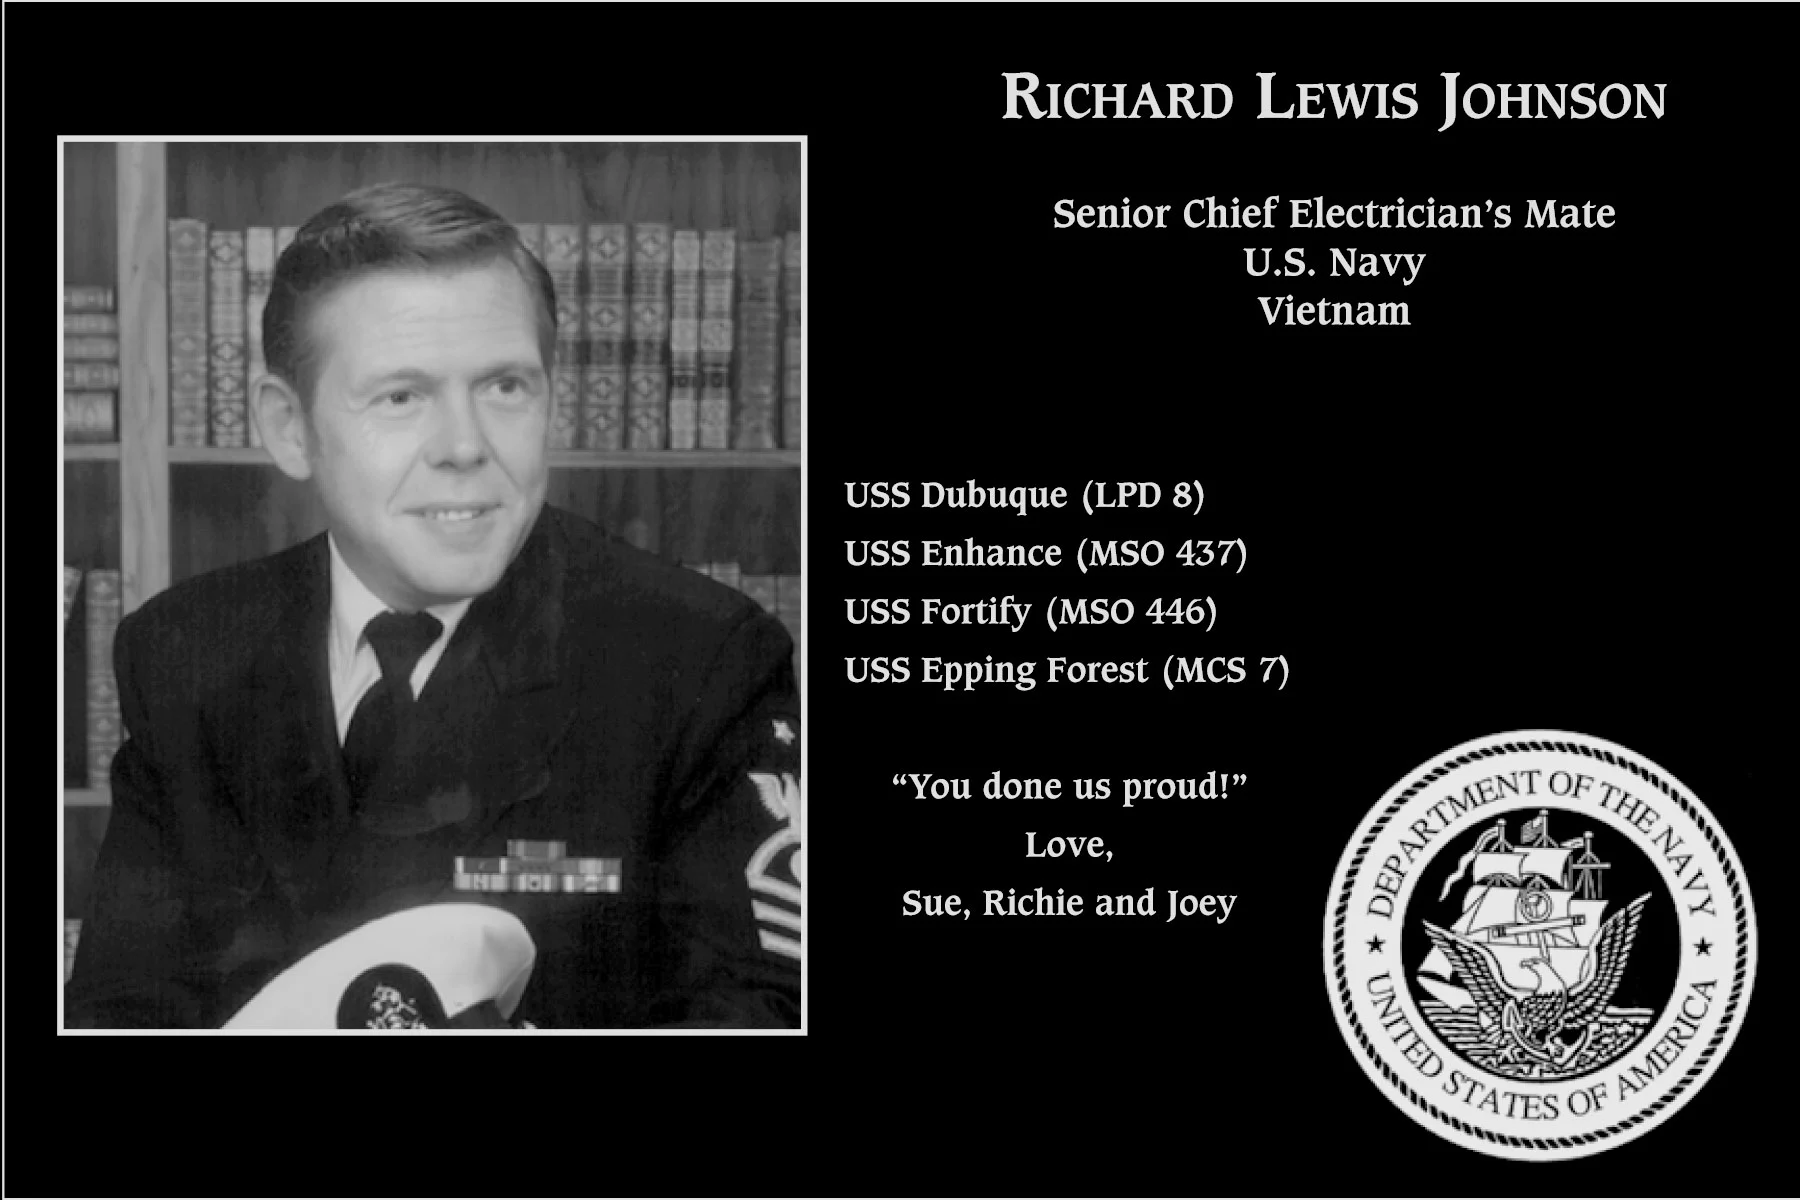 Richard Lewis Johnson